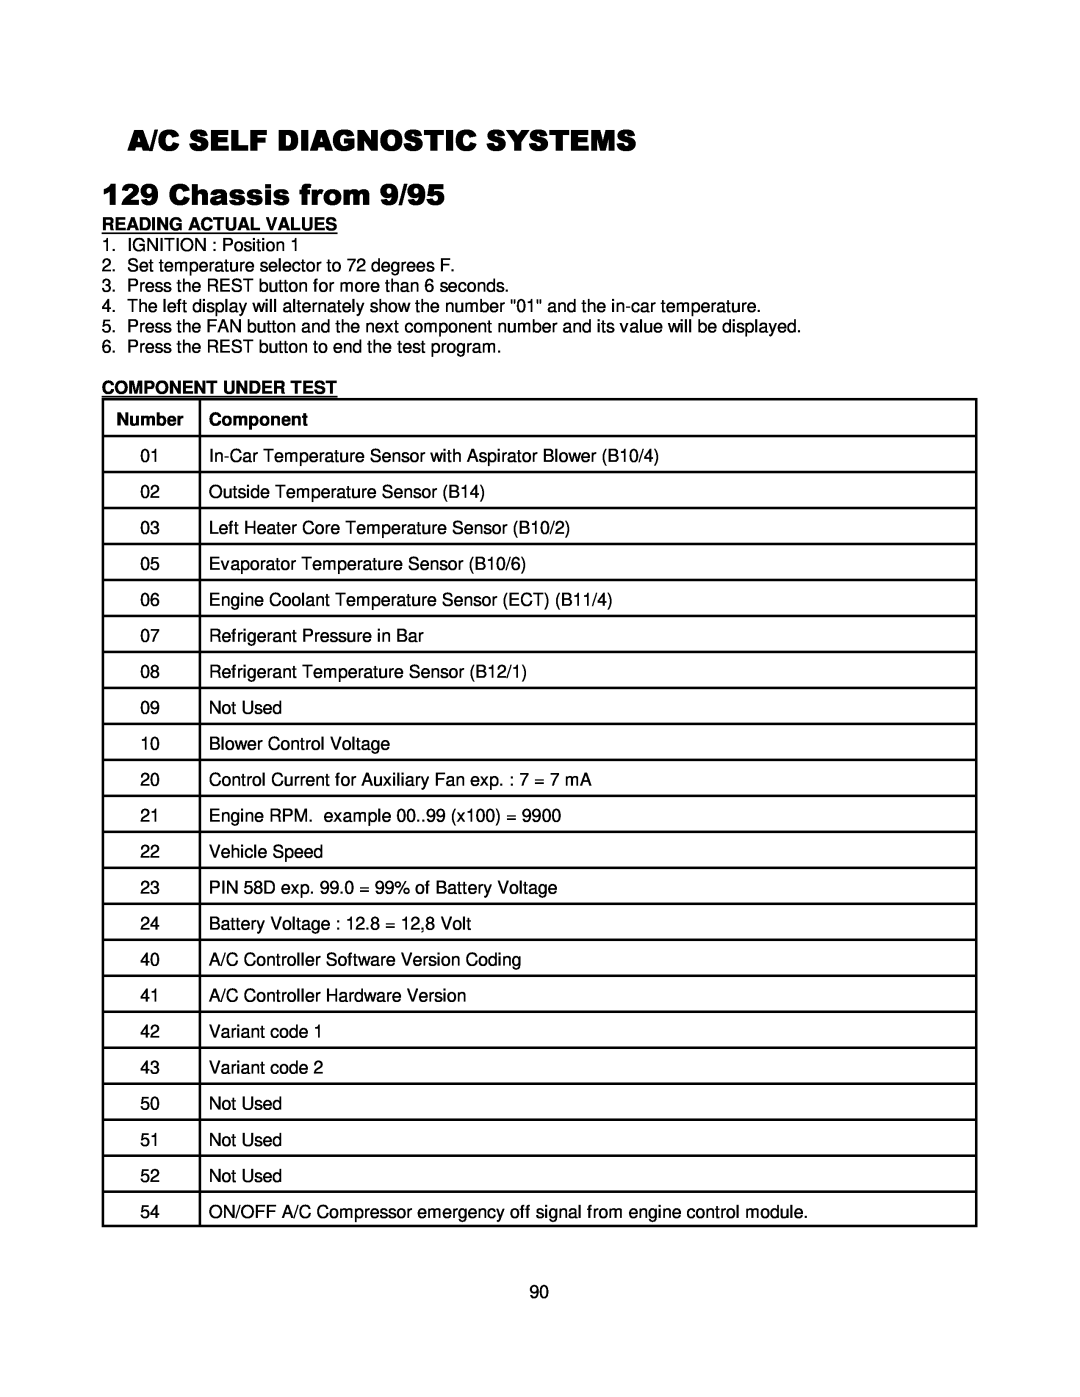 Mercedes-Benz CS1000 manual 647+!2/#779, Reading Actual Values, Component Under Test, Number 